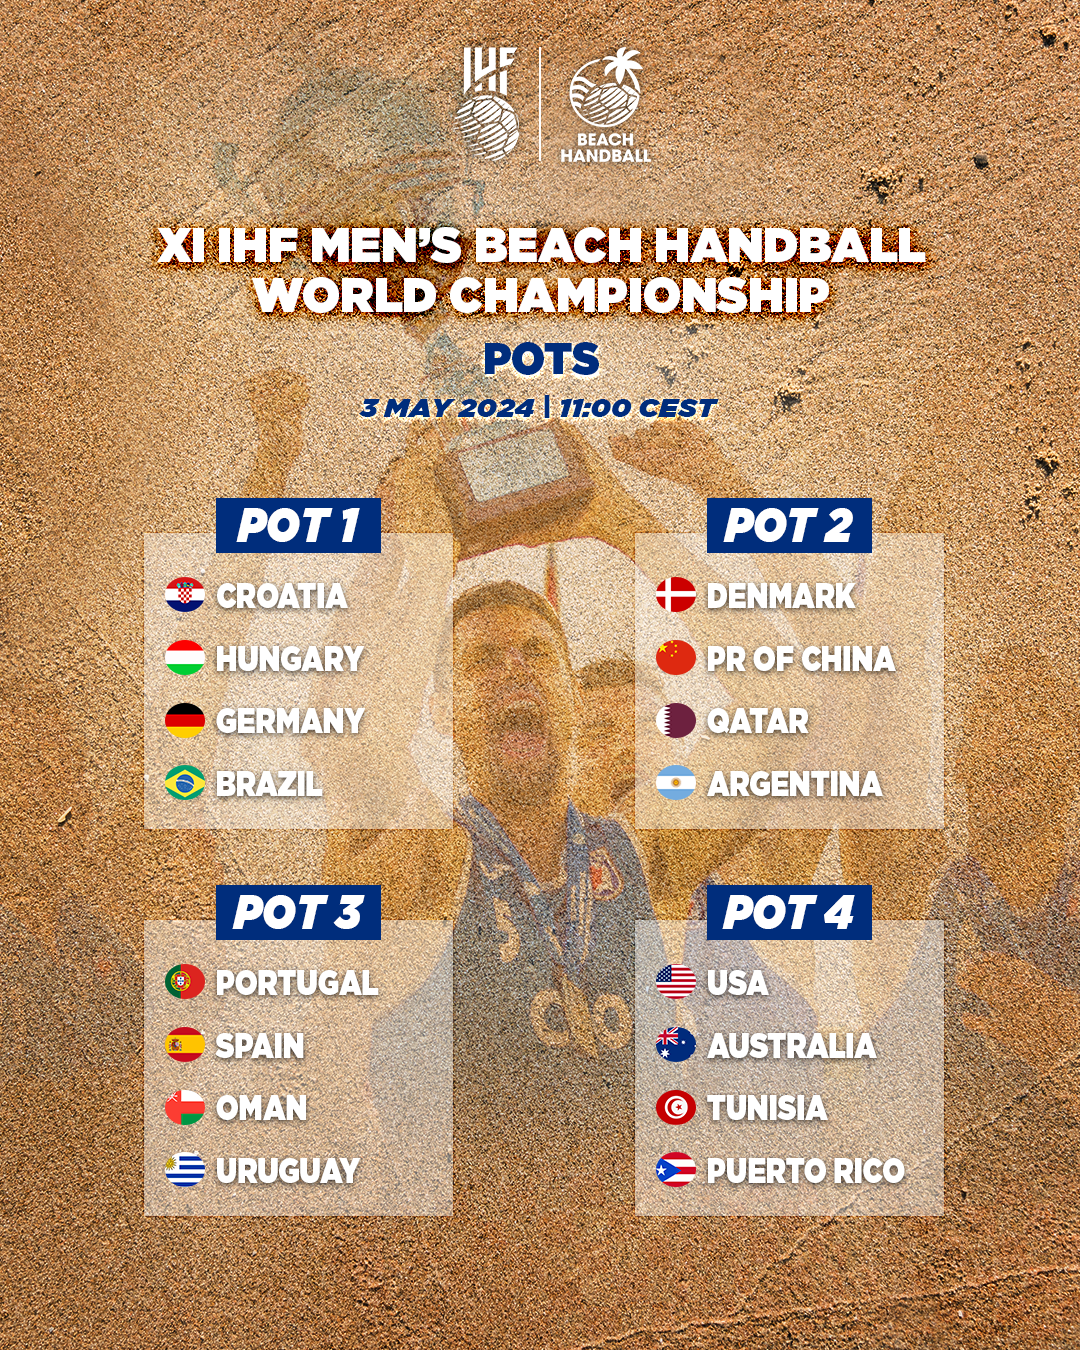 Pots for the Men's Beach Handball World Championship